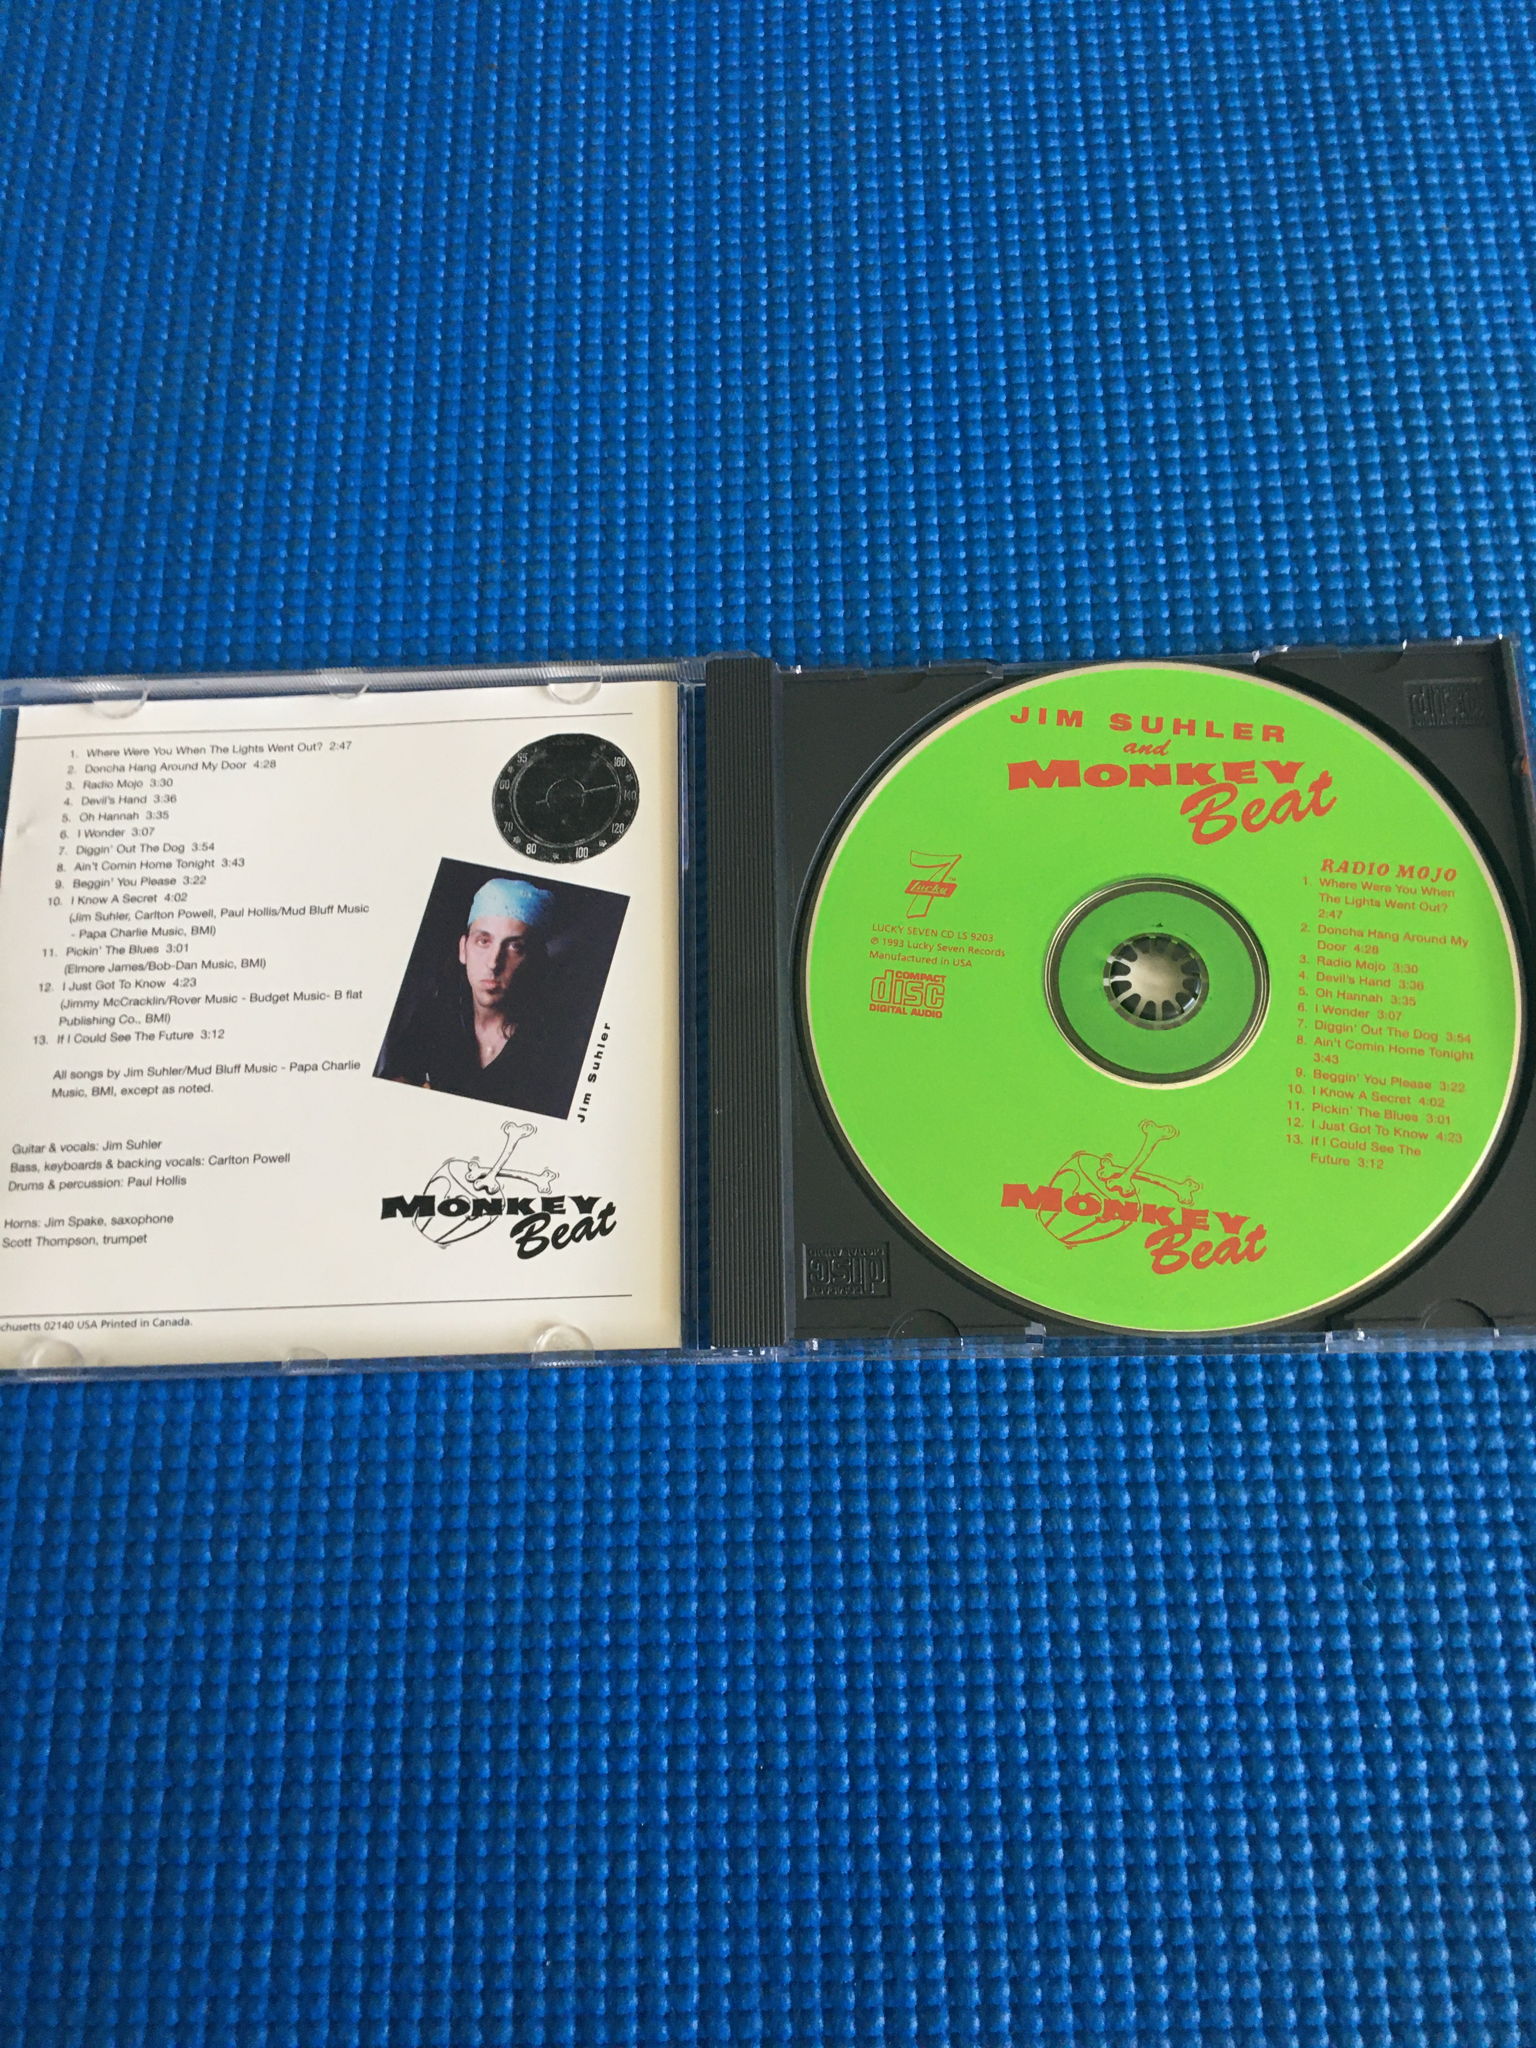 Jim Suhler and Monkey beat Radio mojo cd 1993 lucky 7 lbl 3